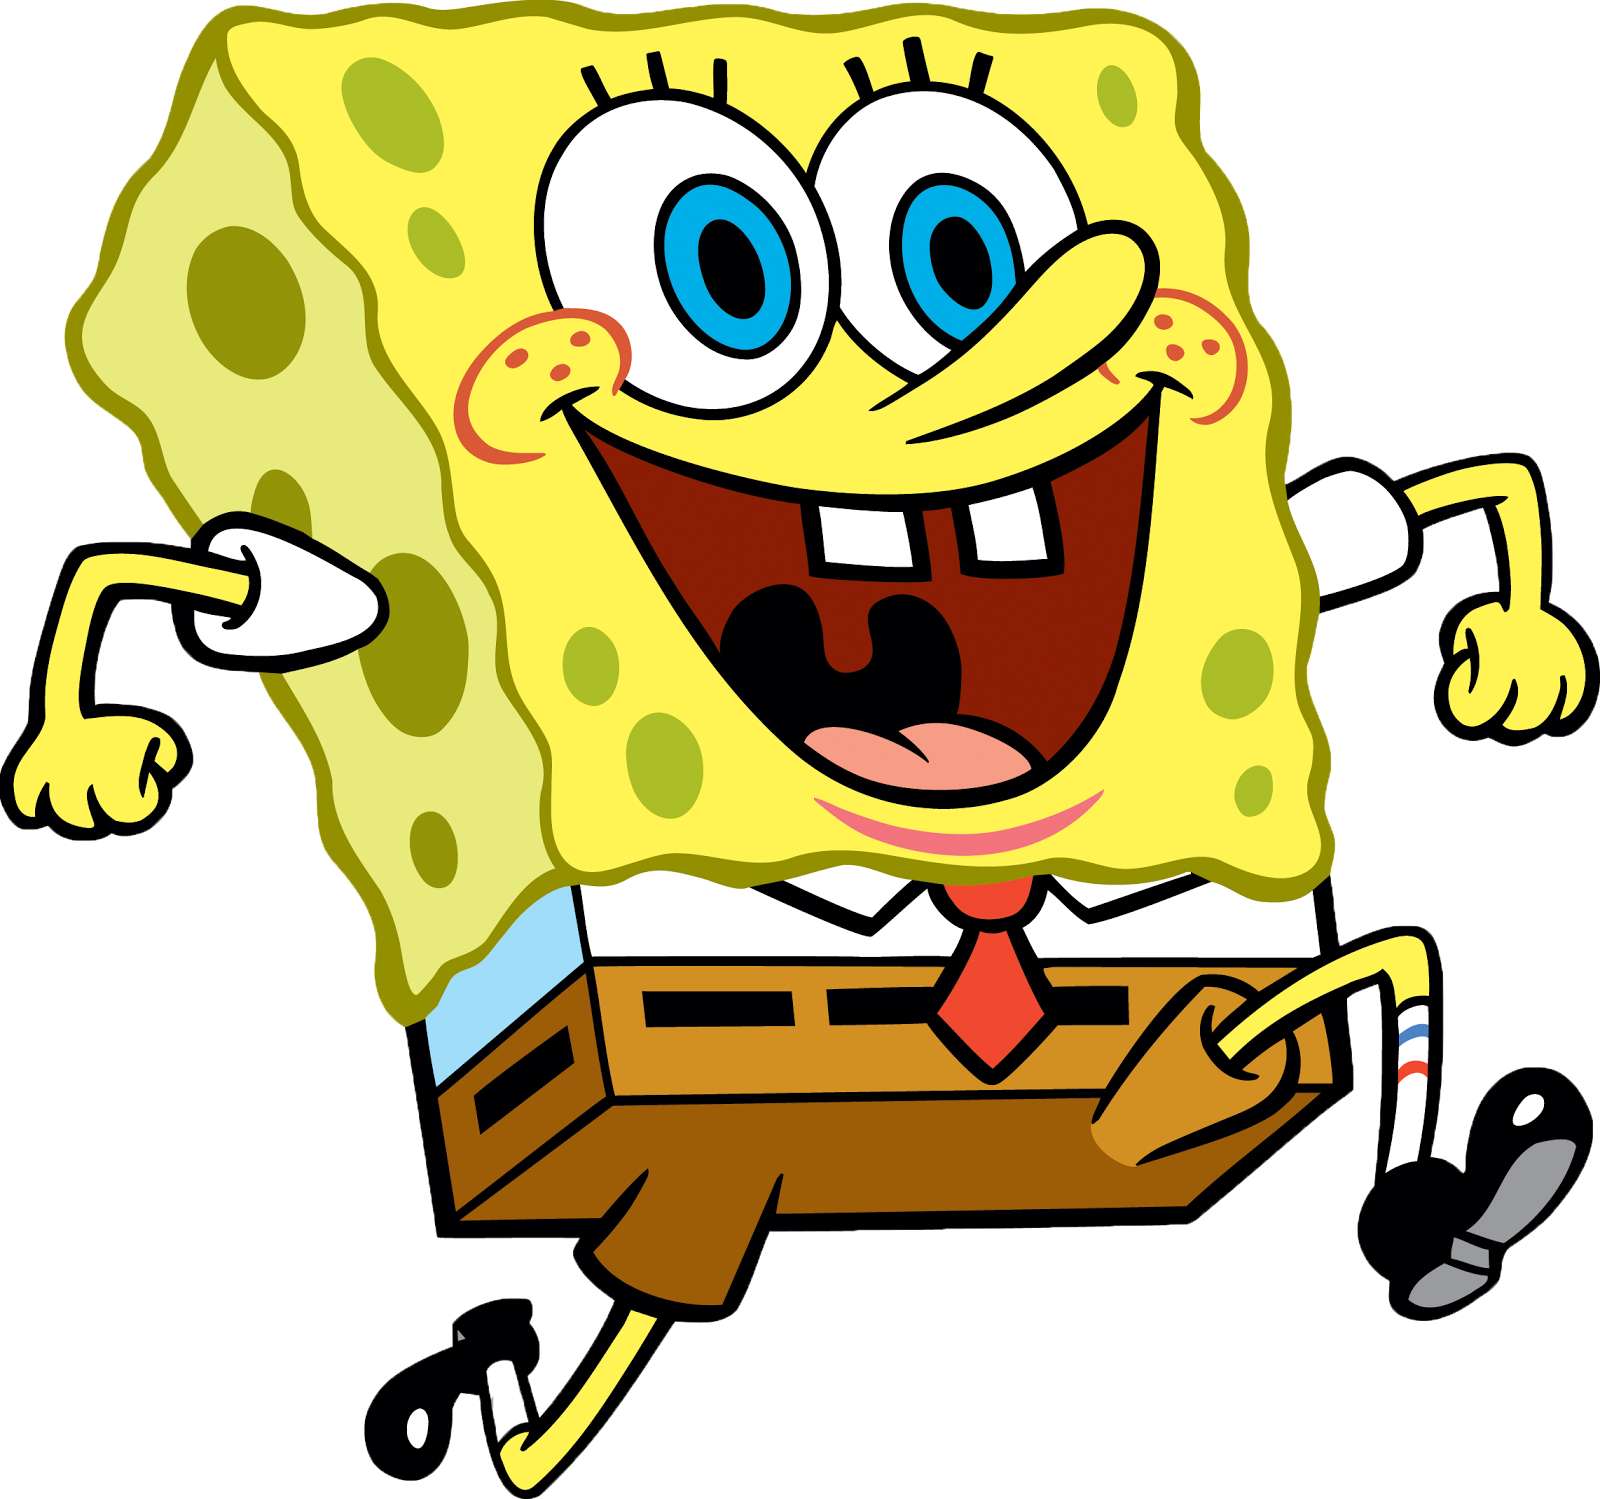 Spongebob Squarepants PNG Transparent Background, Free Download #44227 -  FreeIconsPNG